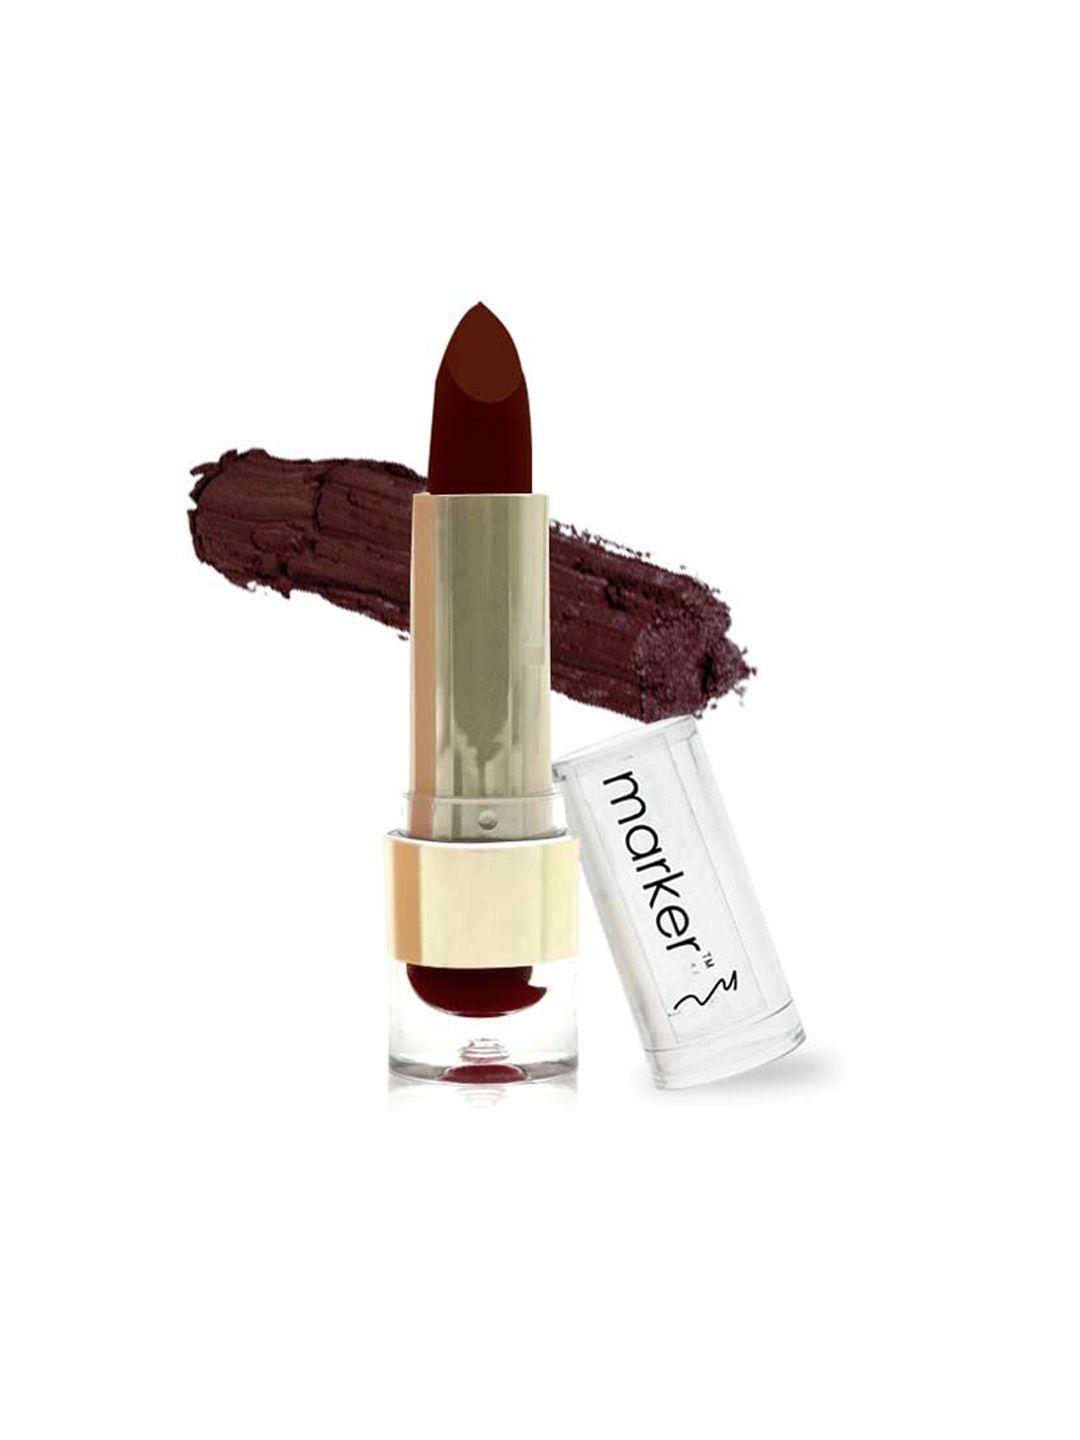 beautyrelay london women marker xplore hd matte lipstick 3.5g - mink brown